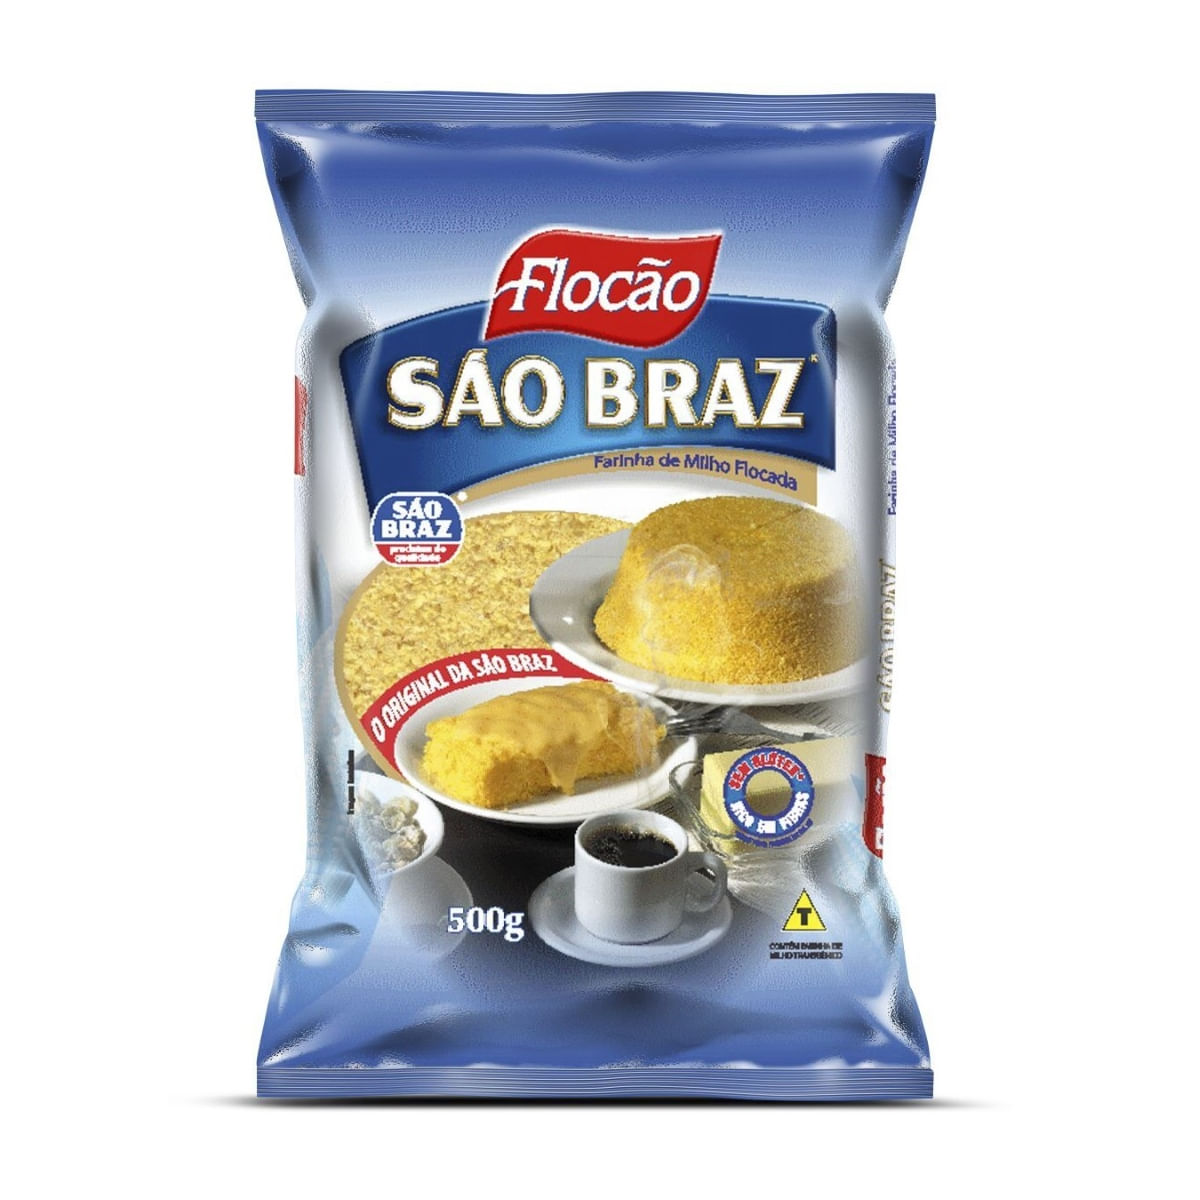 flocao-sao-braz-premium-500g-1.jpg